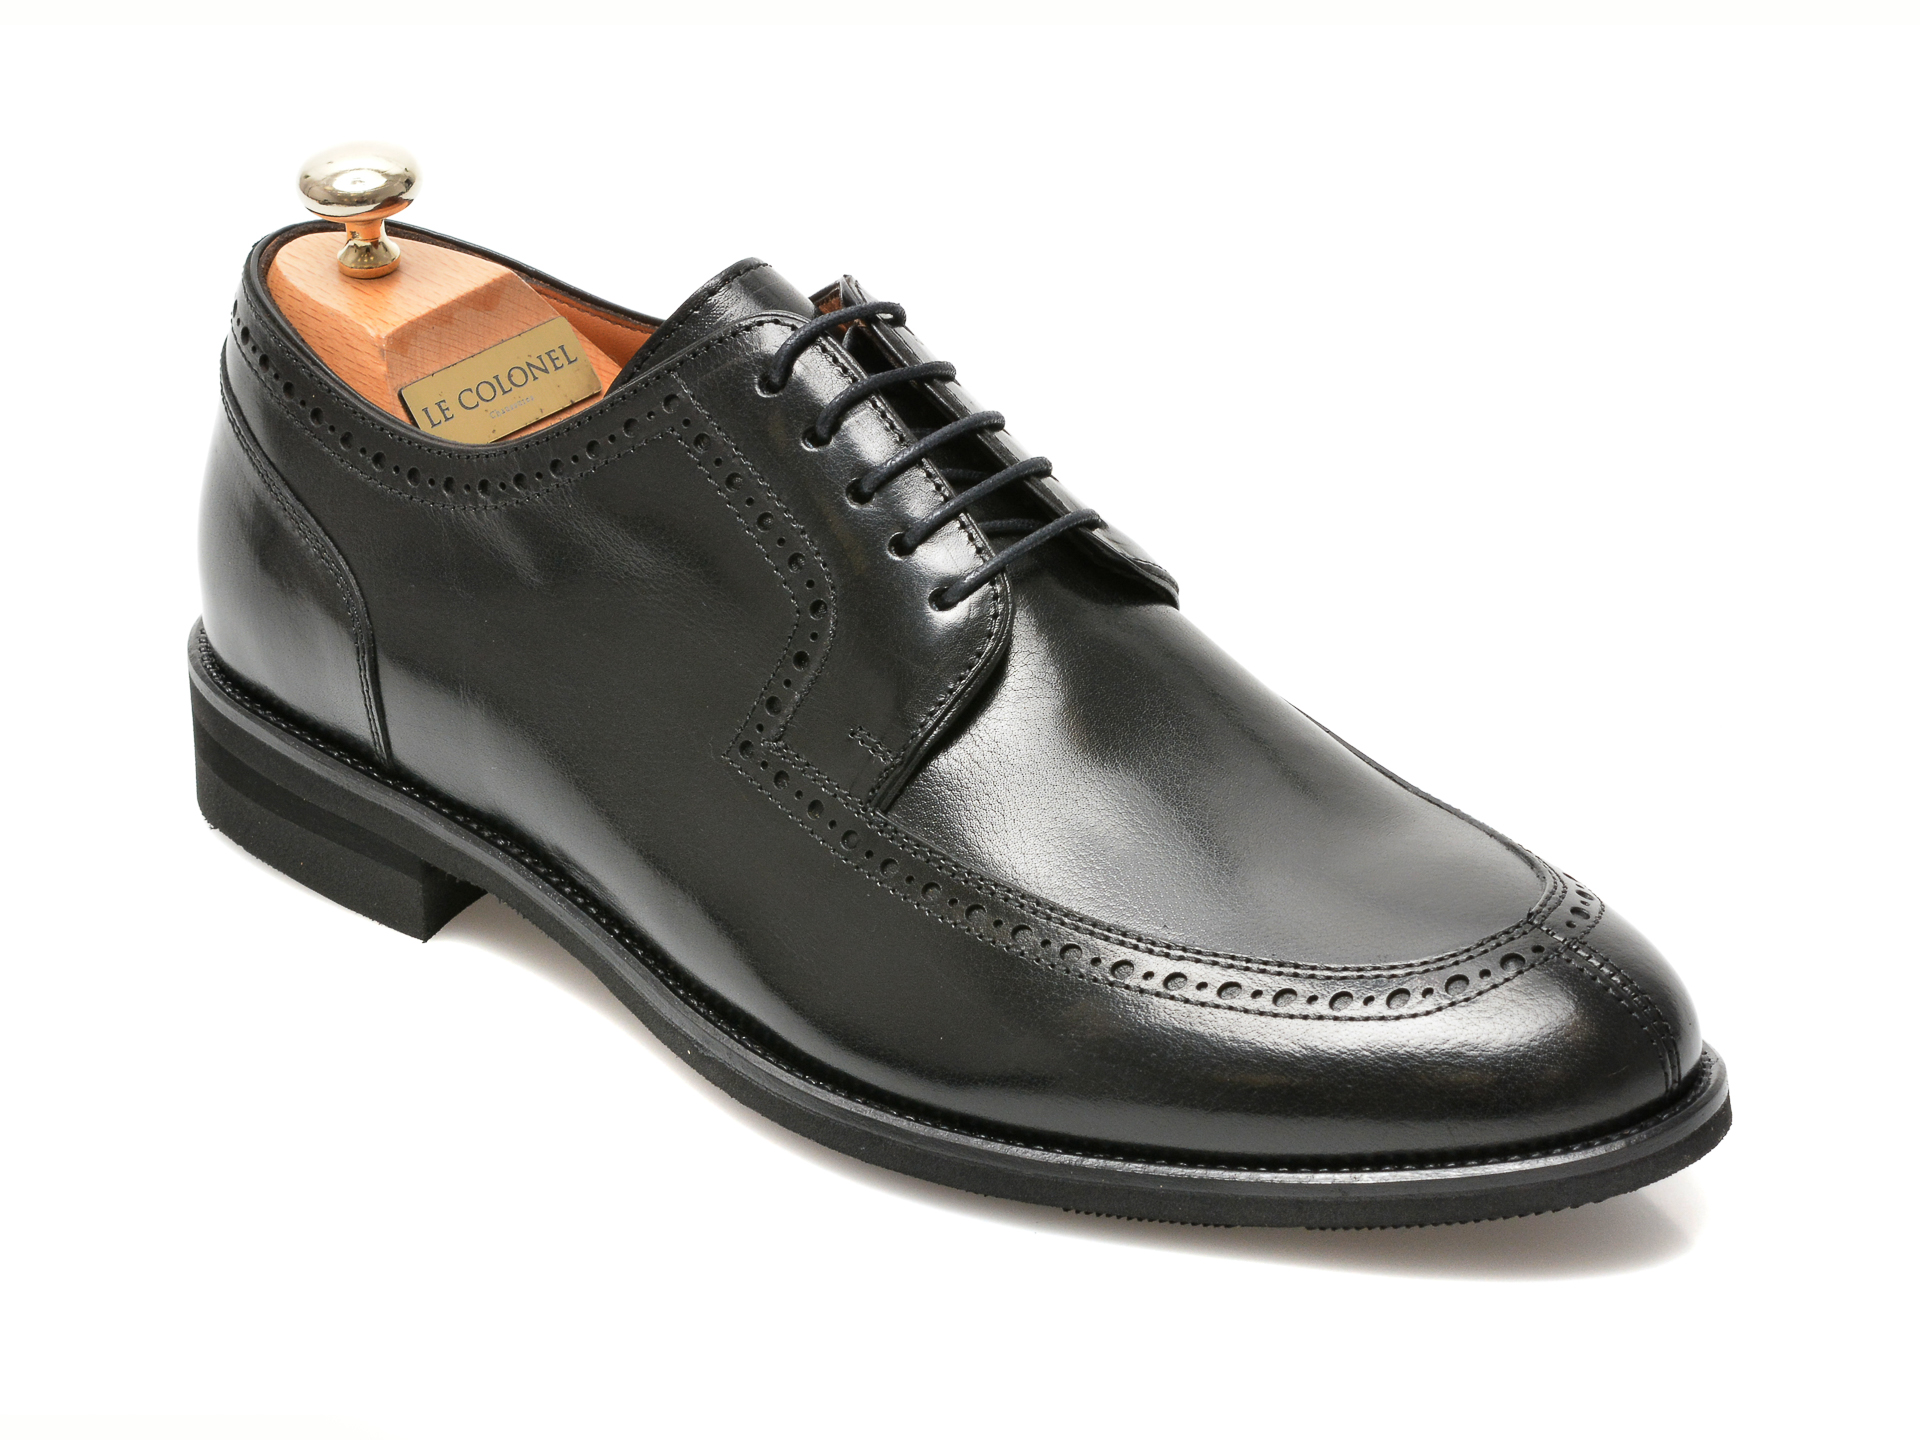 Pantofi LE COLONEL negri, 45279, din piele naturala